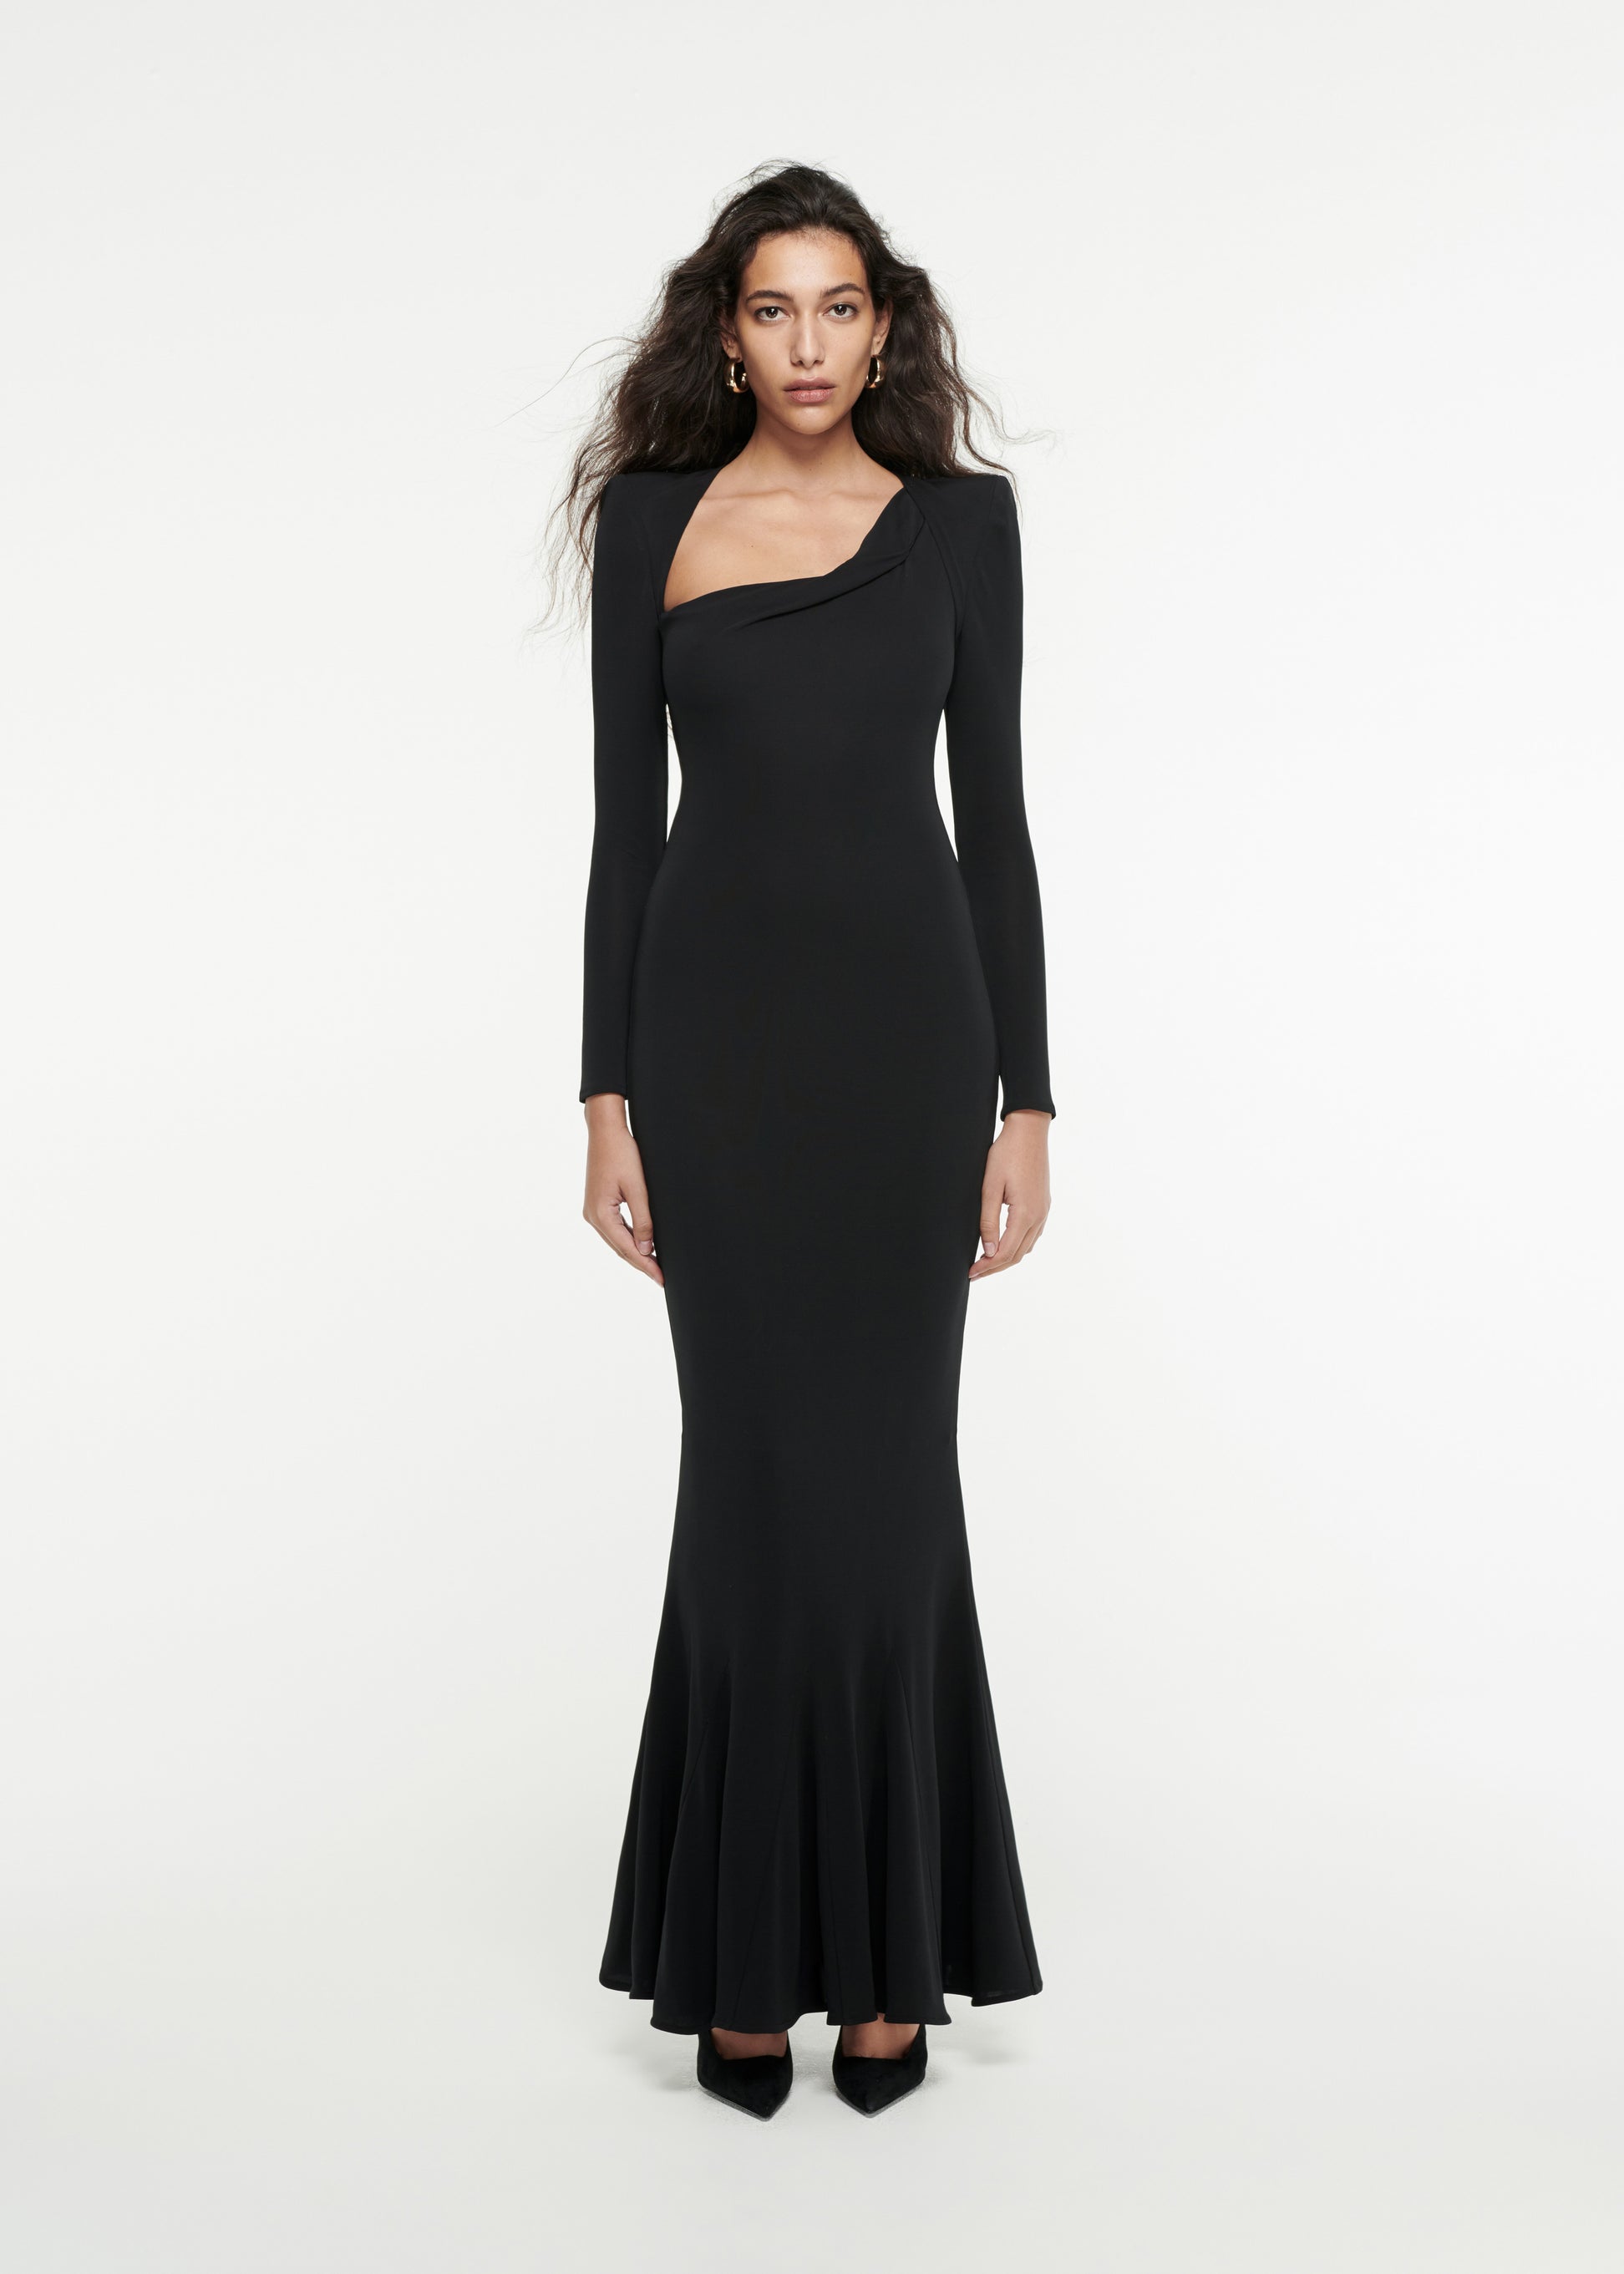 Woman wearing the Long Sleeve Asymmetric Gown in Black 